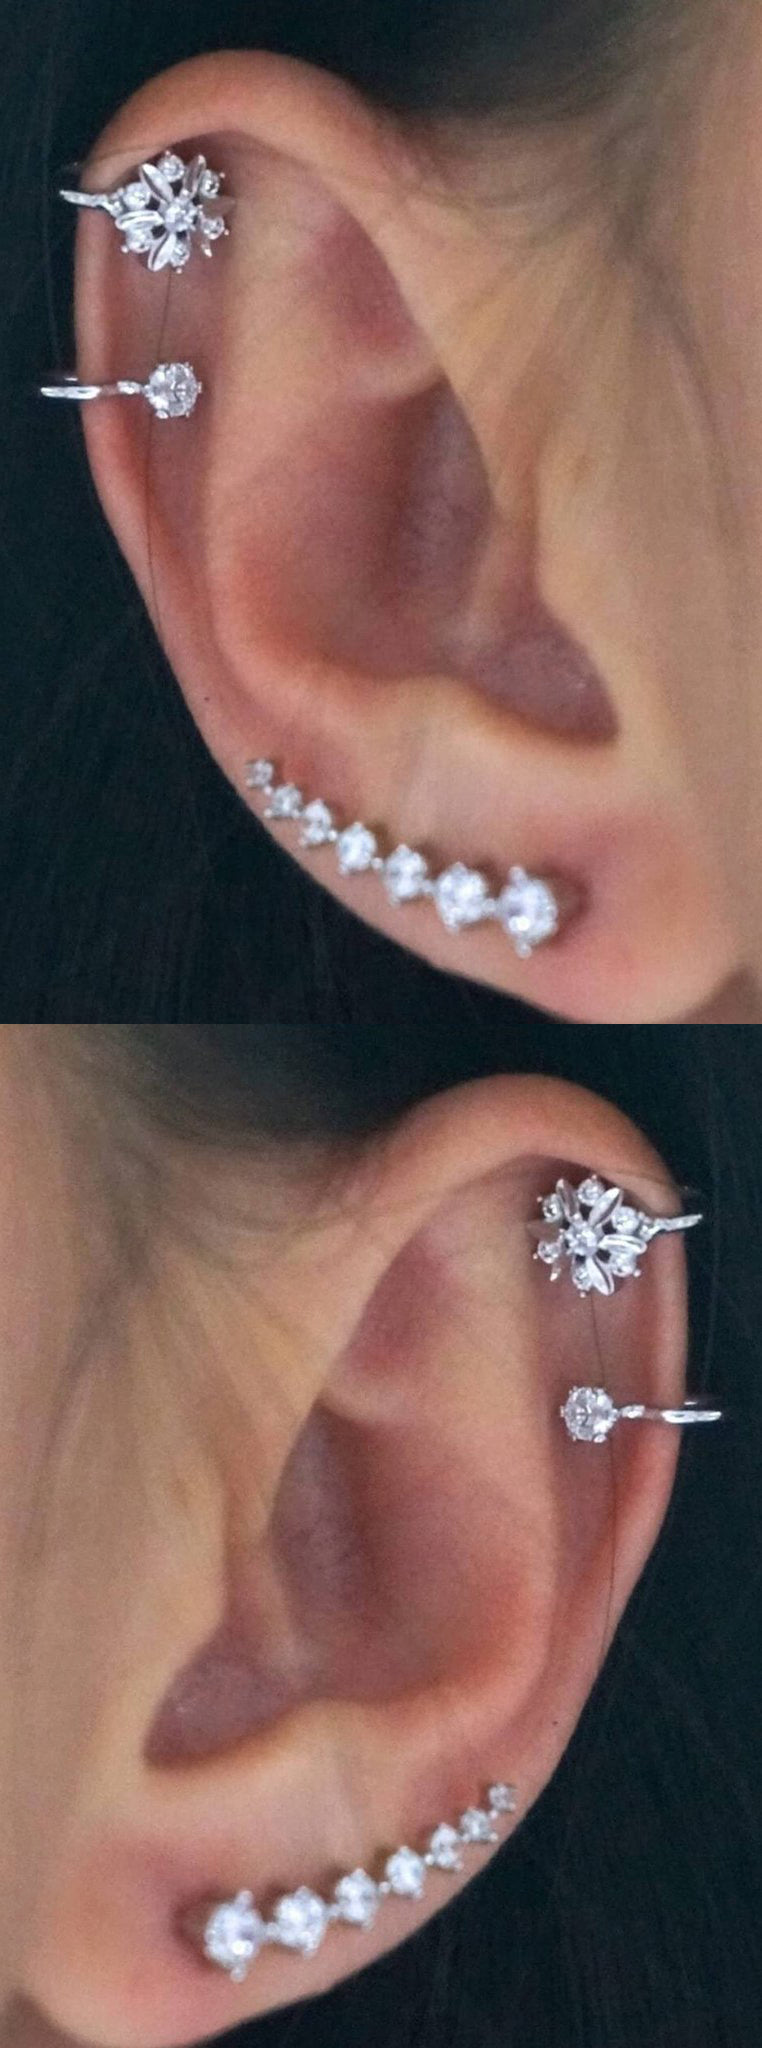 Classy Ear Piercing Ideas at MyBodiArt.com - Double Cartilage Helix Ring - Crystal Ear Climber Earring 